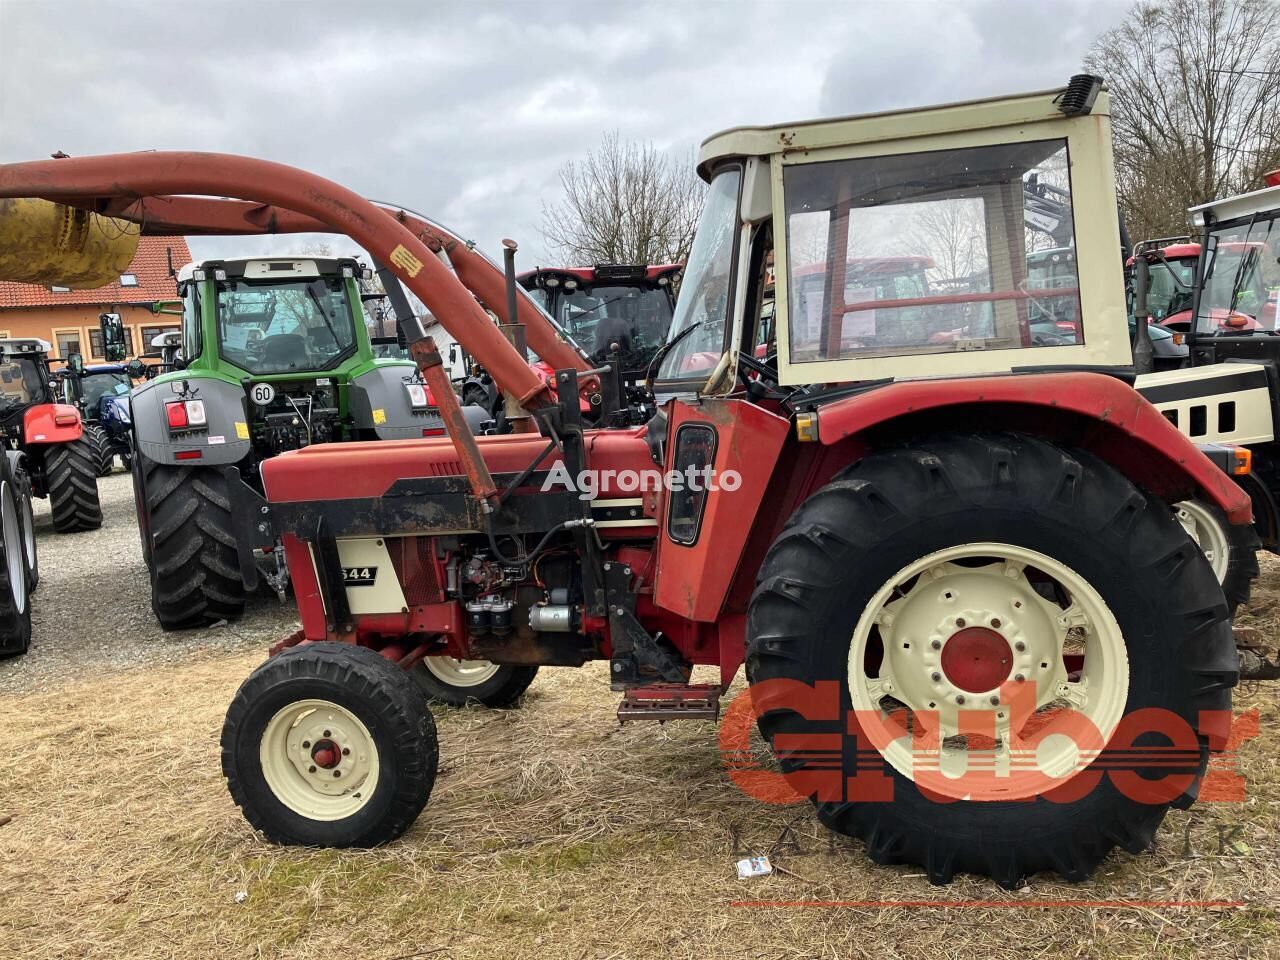 Case IH 644 wheel tractor